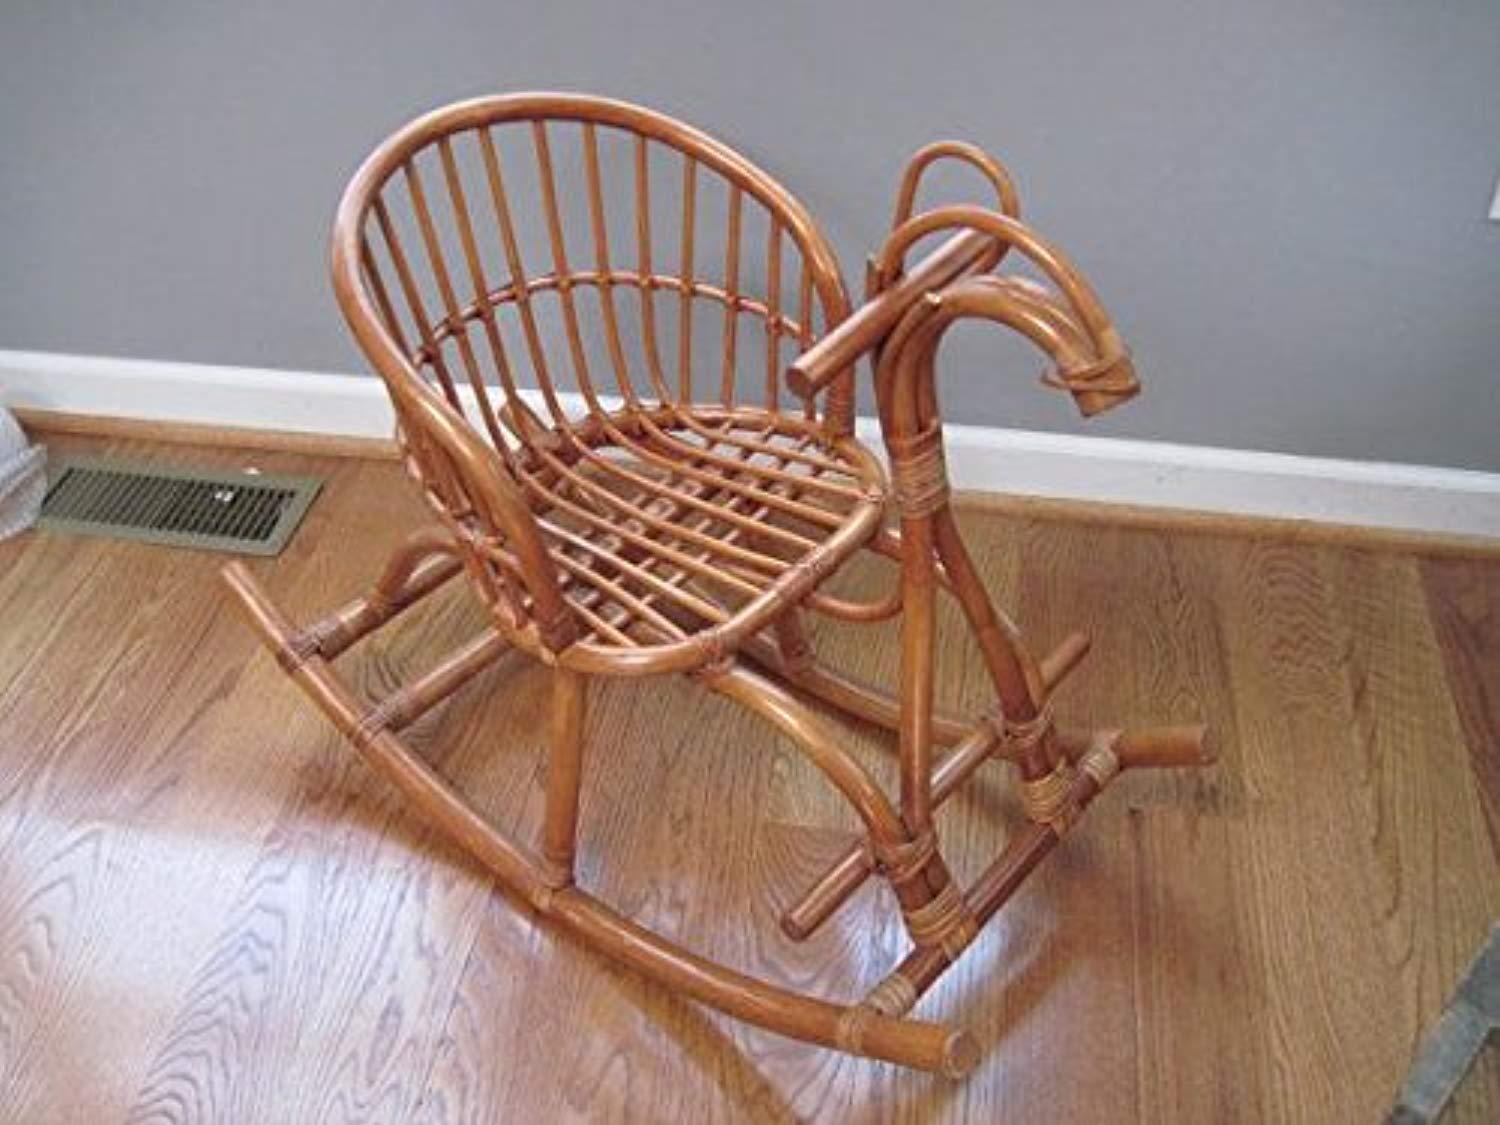 IRA Cane Art Contemporary Rattan Horse Rocking Chair For Kids - IRA Furniture